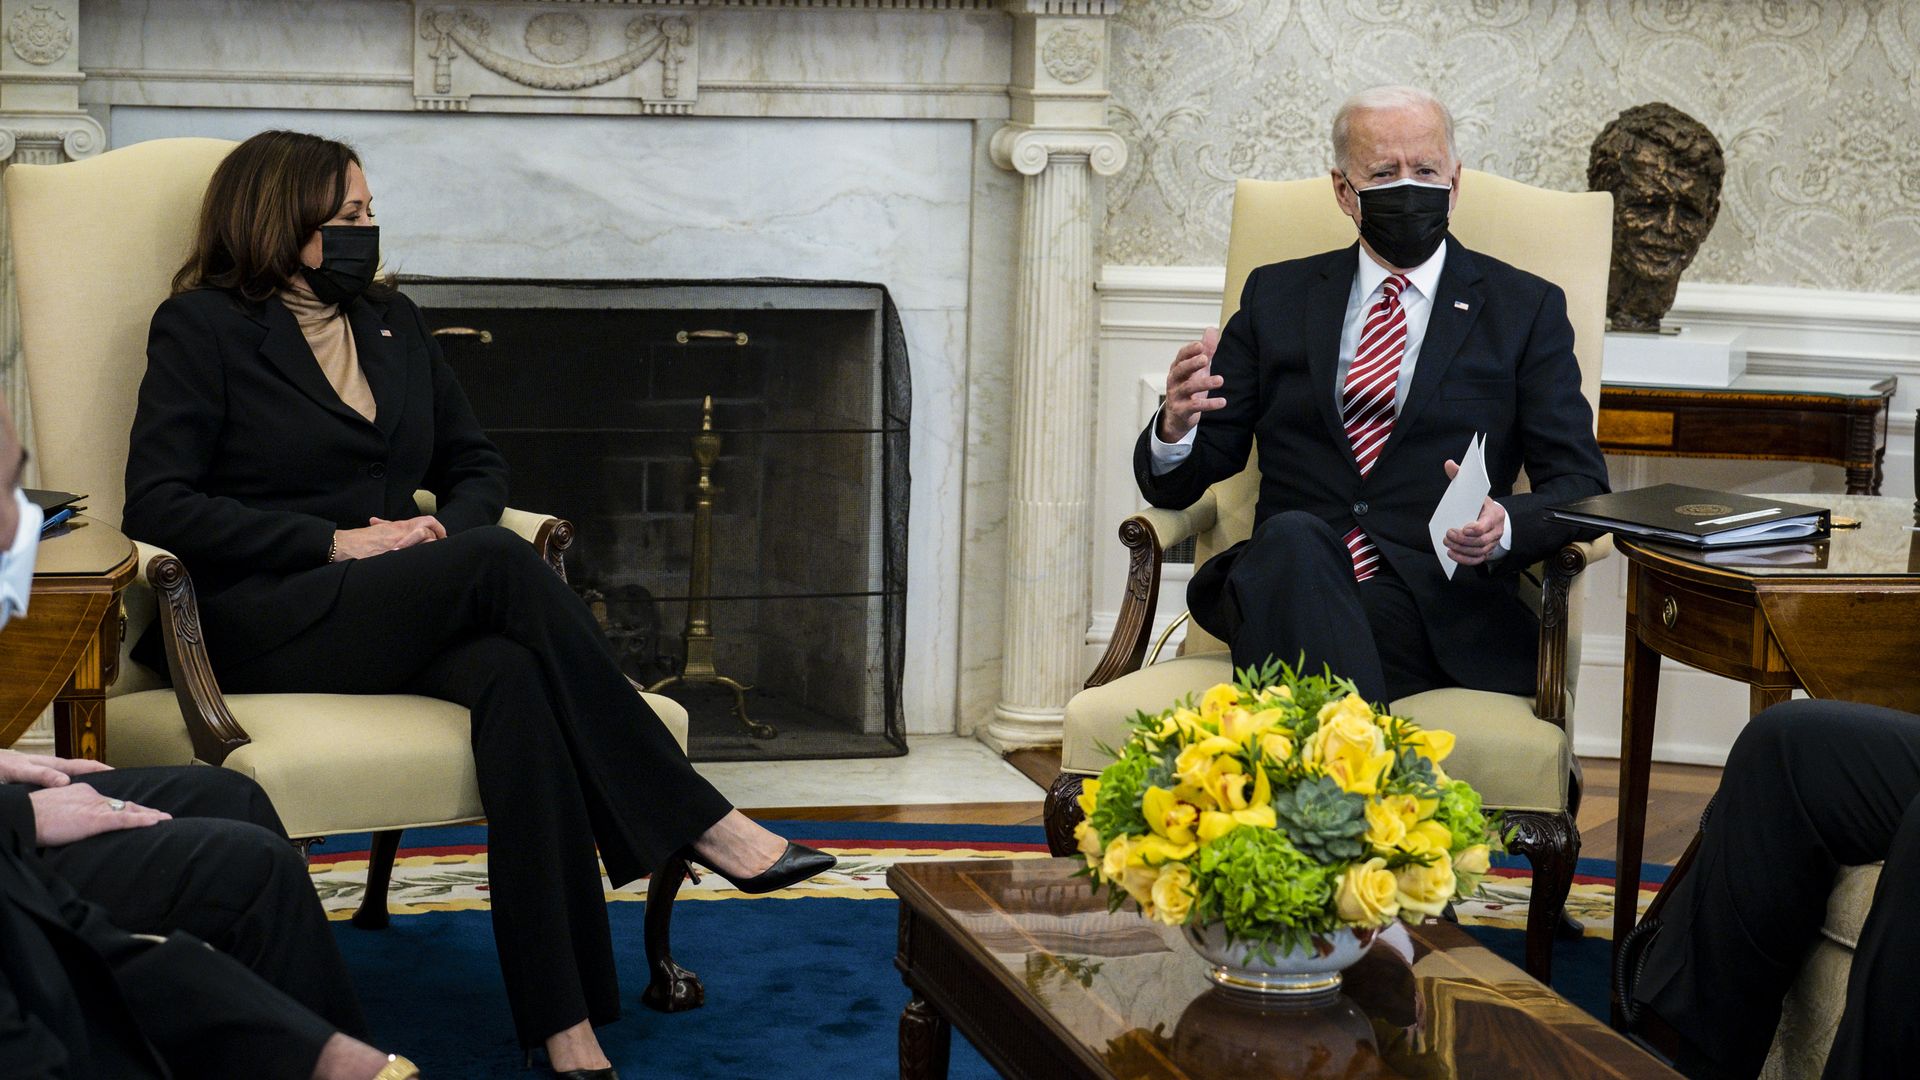 Biden and Kamala Harris sit in the Oval Office 